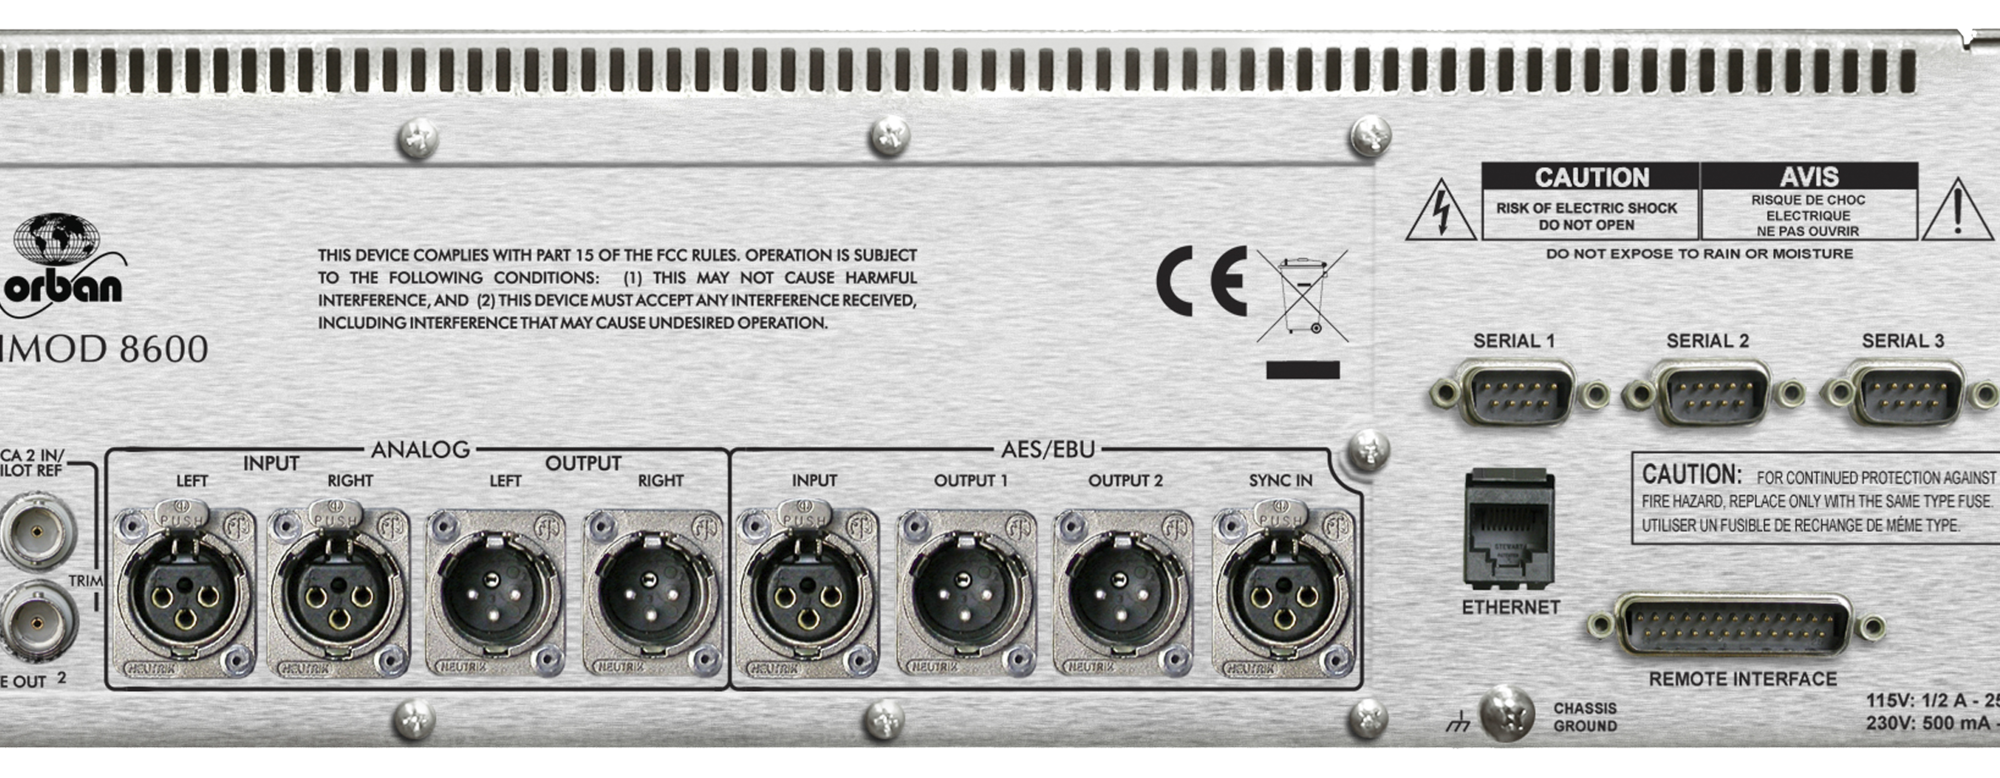 Optimod-FM 8600 HD – orban